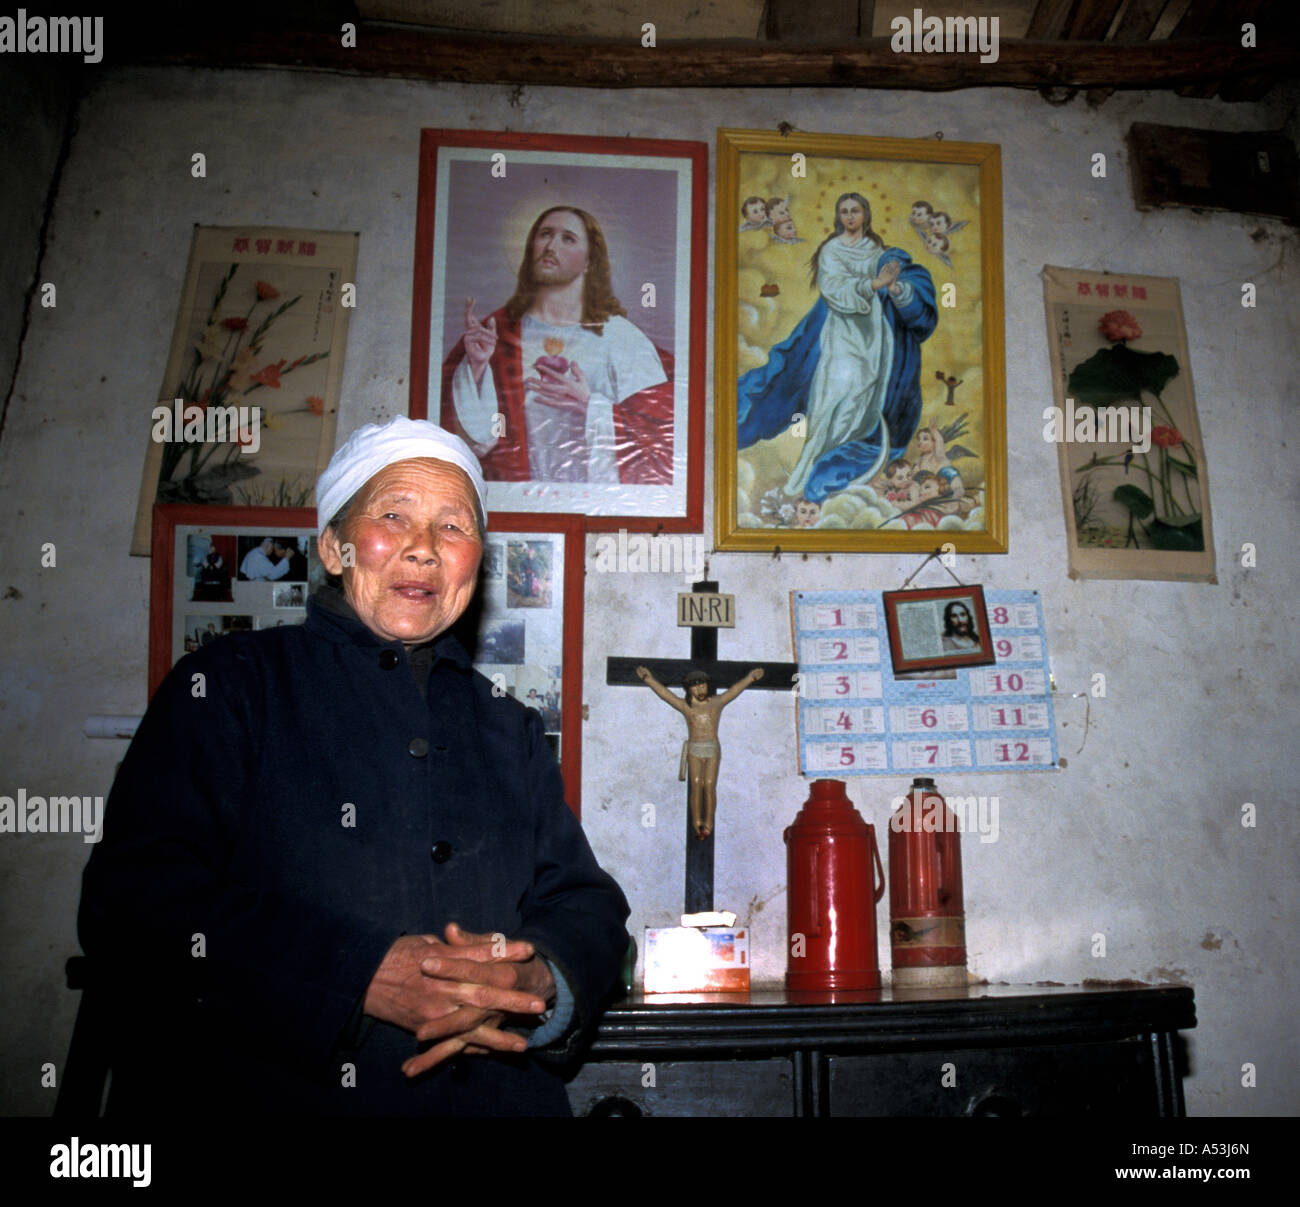 Painet ha1029 7084 donna cinese chen gui ying Chinese Catholic home villaggio xinghe shanxi xian paese nazione in via di sviluppo Foto Stock